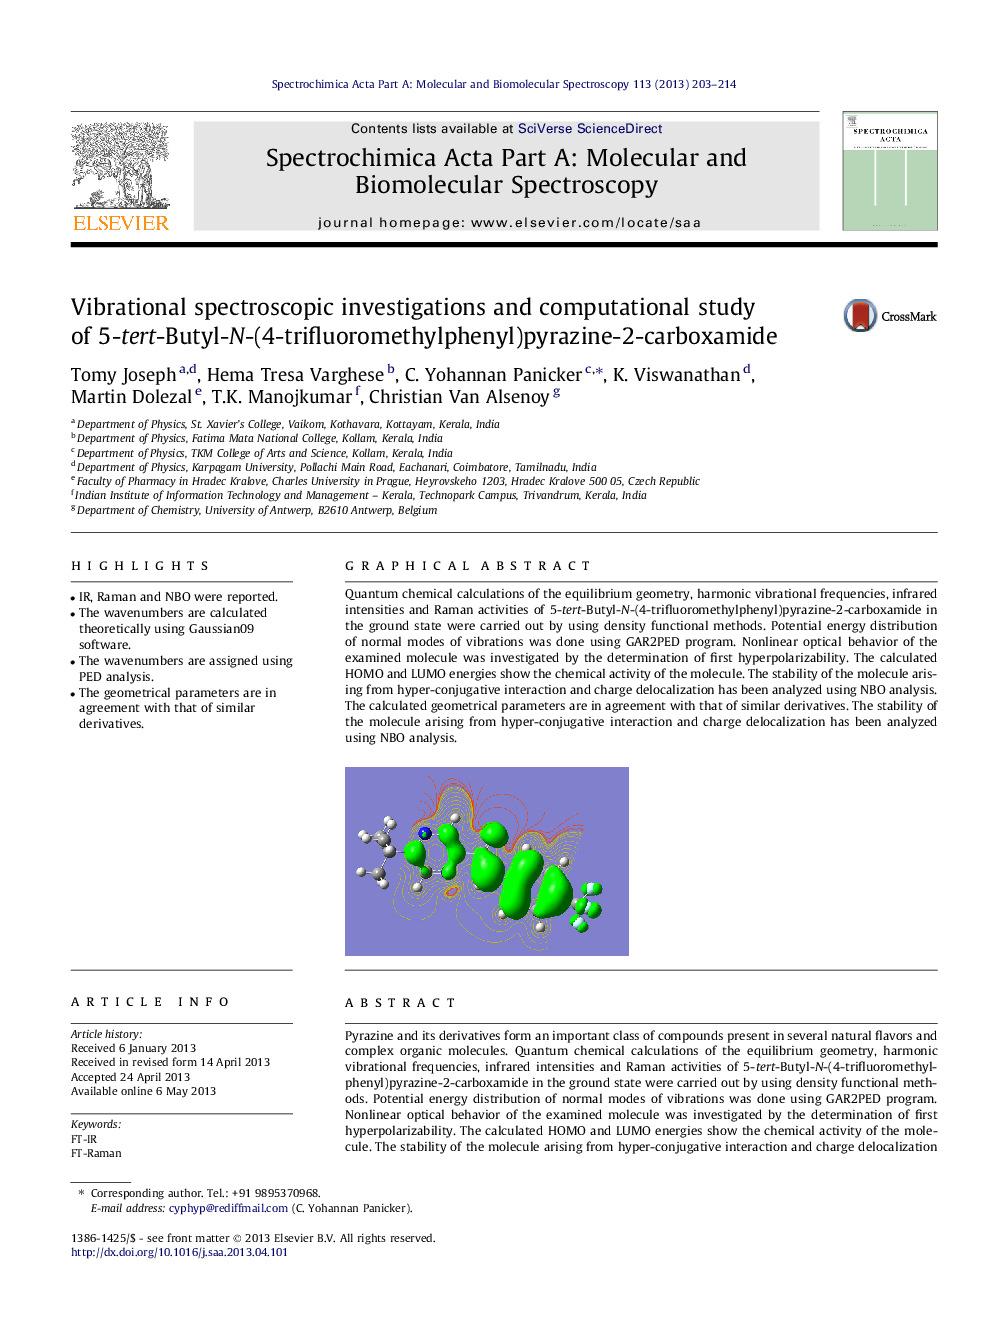 Vibrational spectroscopic investigations and computational study of 5-tert-Butyl-N-(4-trifluoromethylphenyl)pyrazine-2-carboxamide